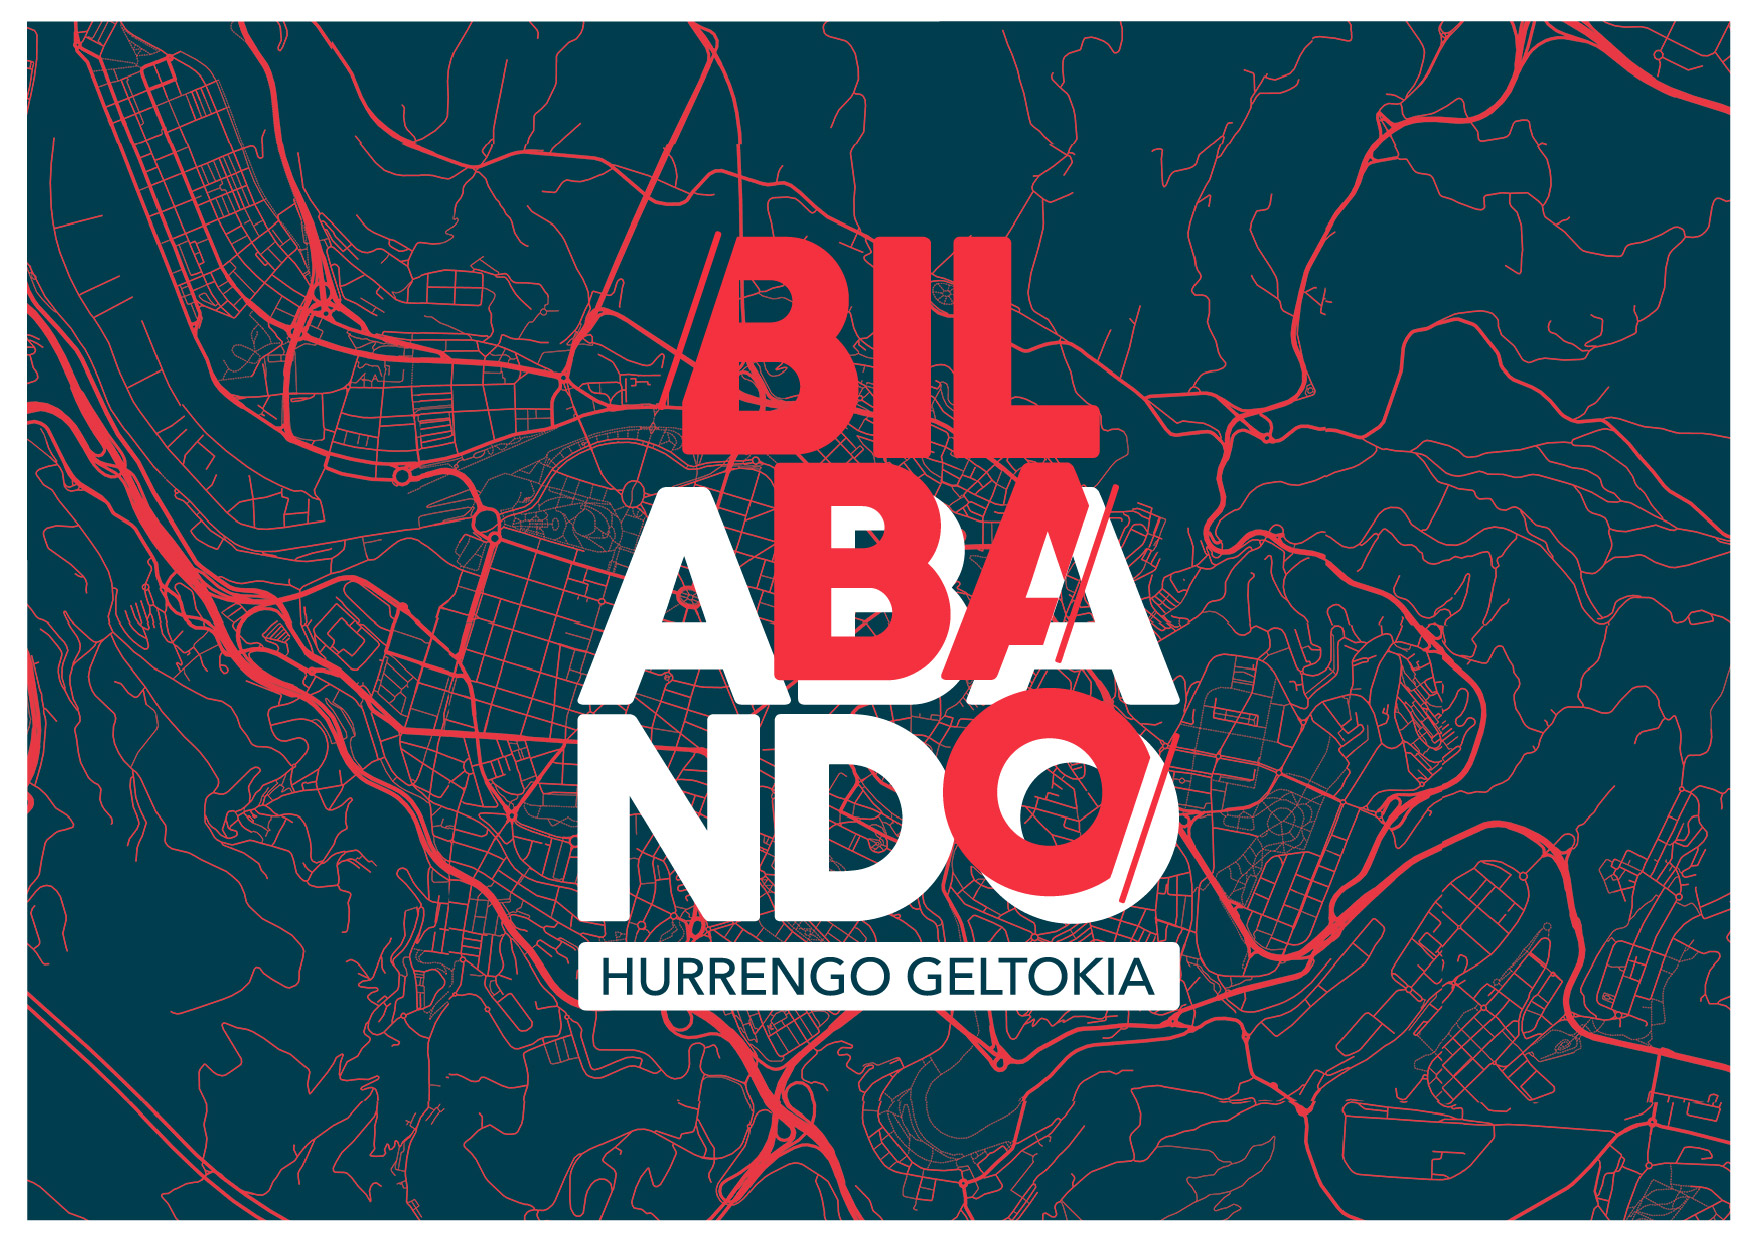 Bilbao-Abando. Hurrengo Geltokia by Sirope - Creative Work